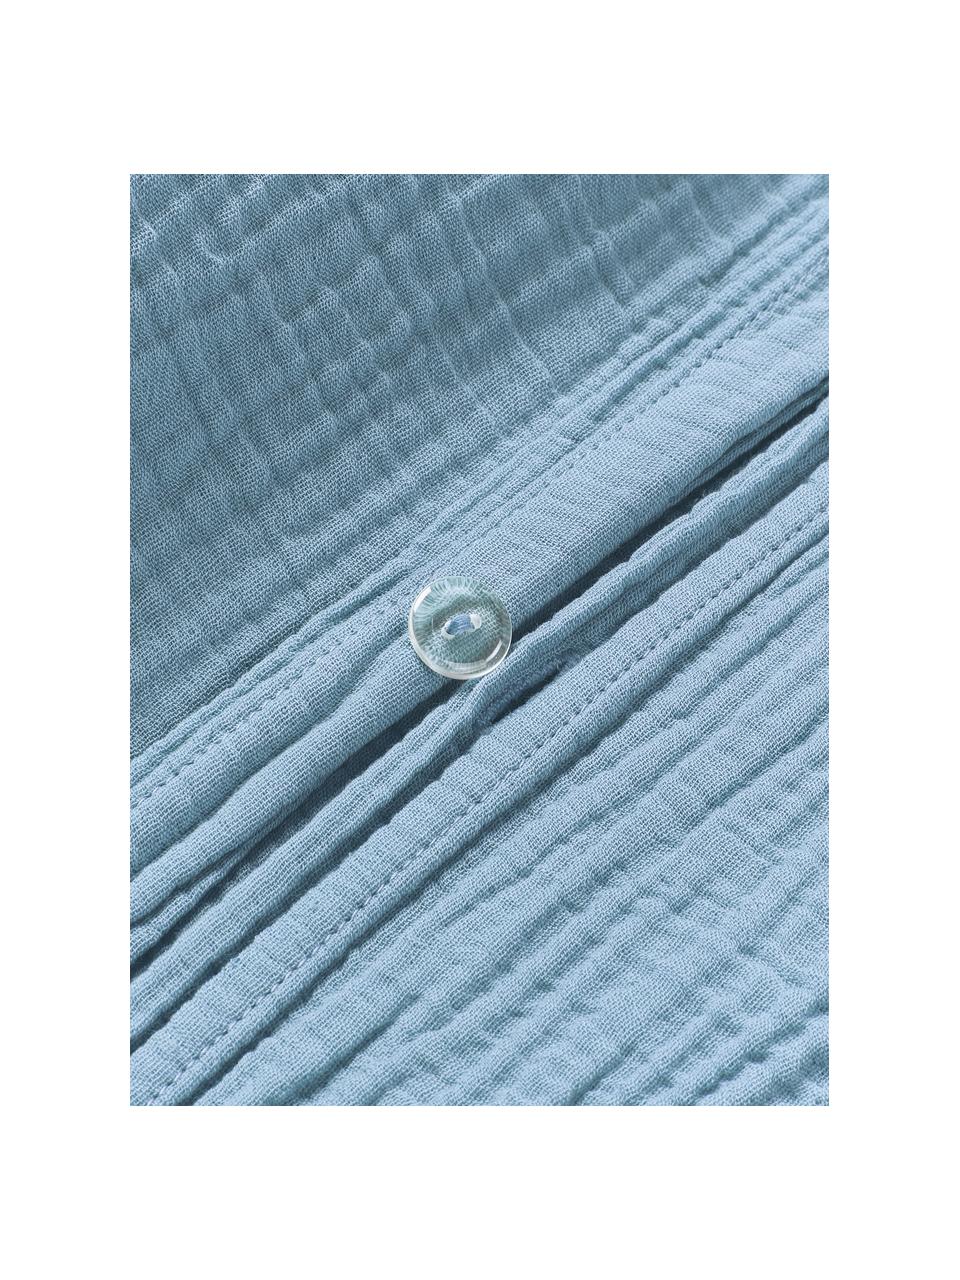 Musselin-Kopfkissenbezug Odile, Webart: Musselin Fadendichte 200 , Graublau, B 40 x L 80 cm